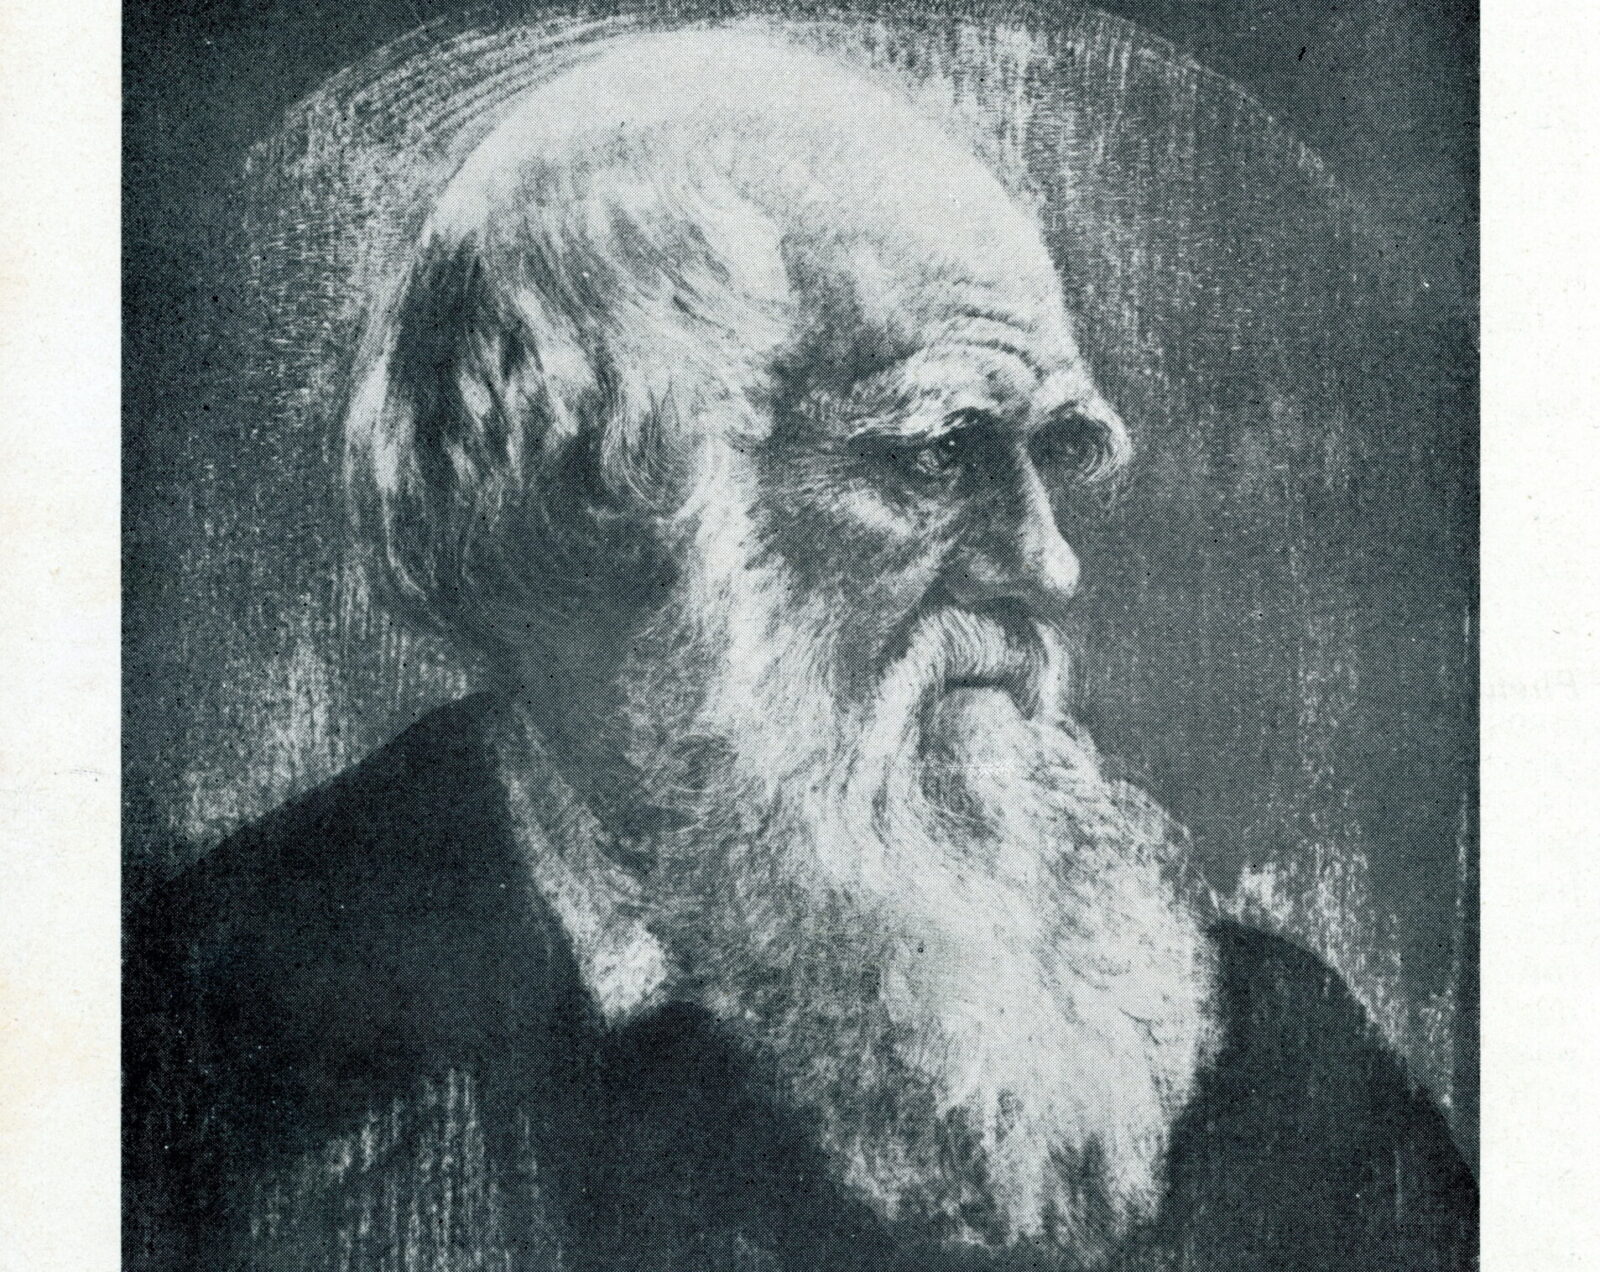 Charles Darwin, English naturalist